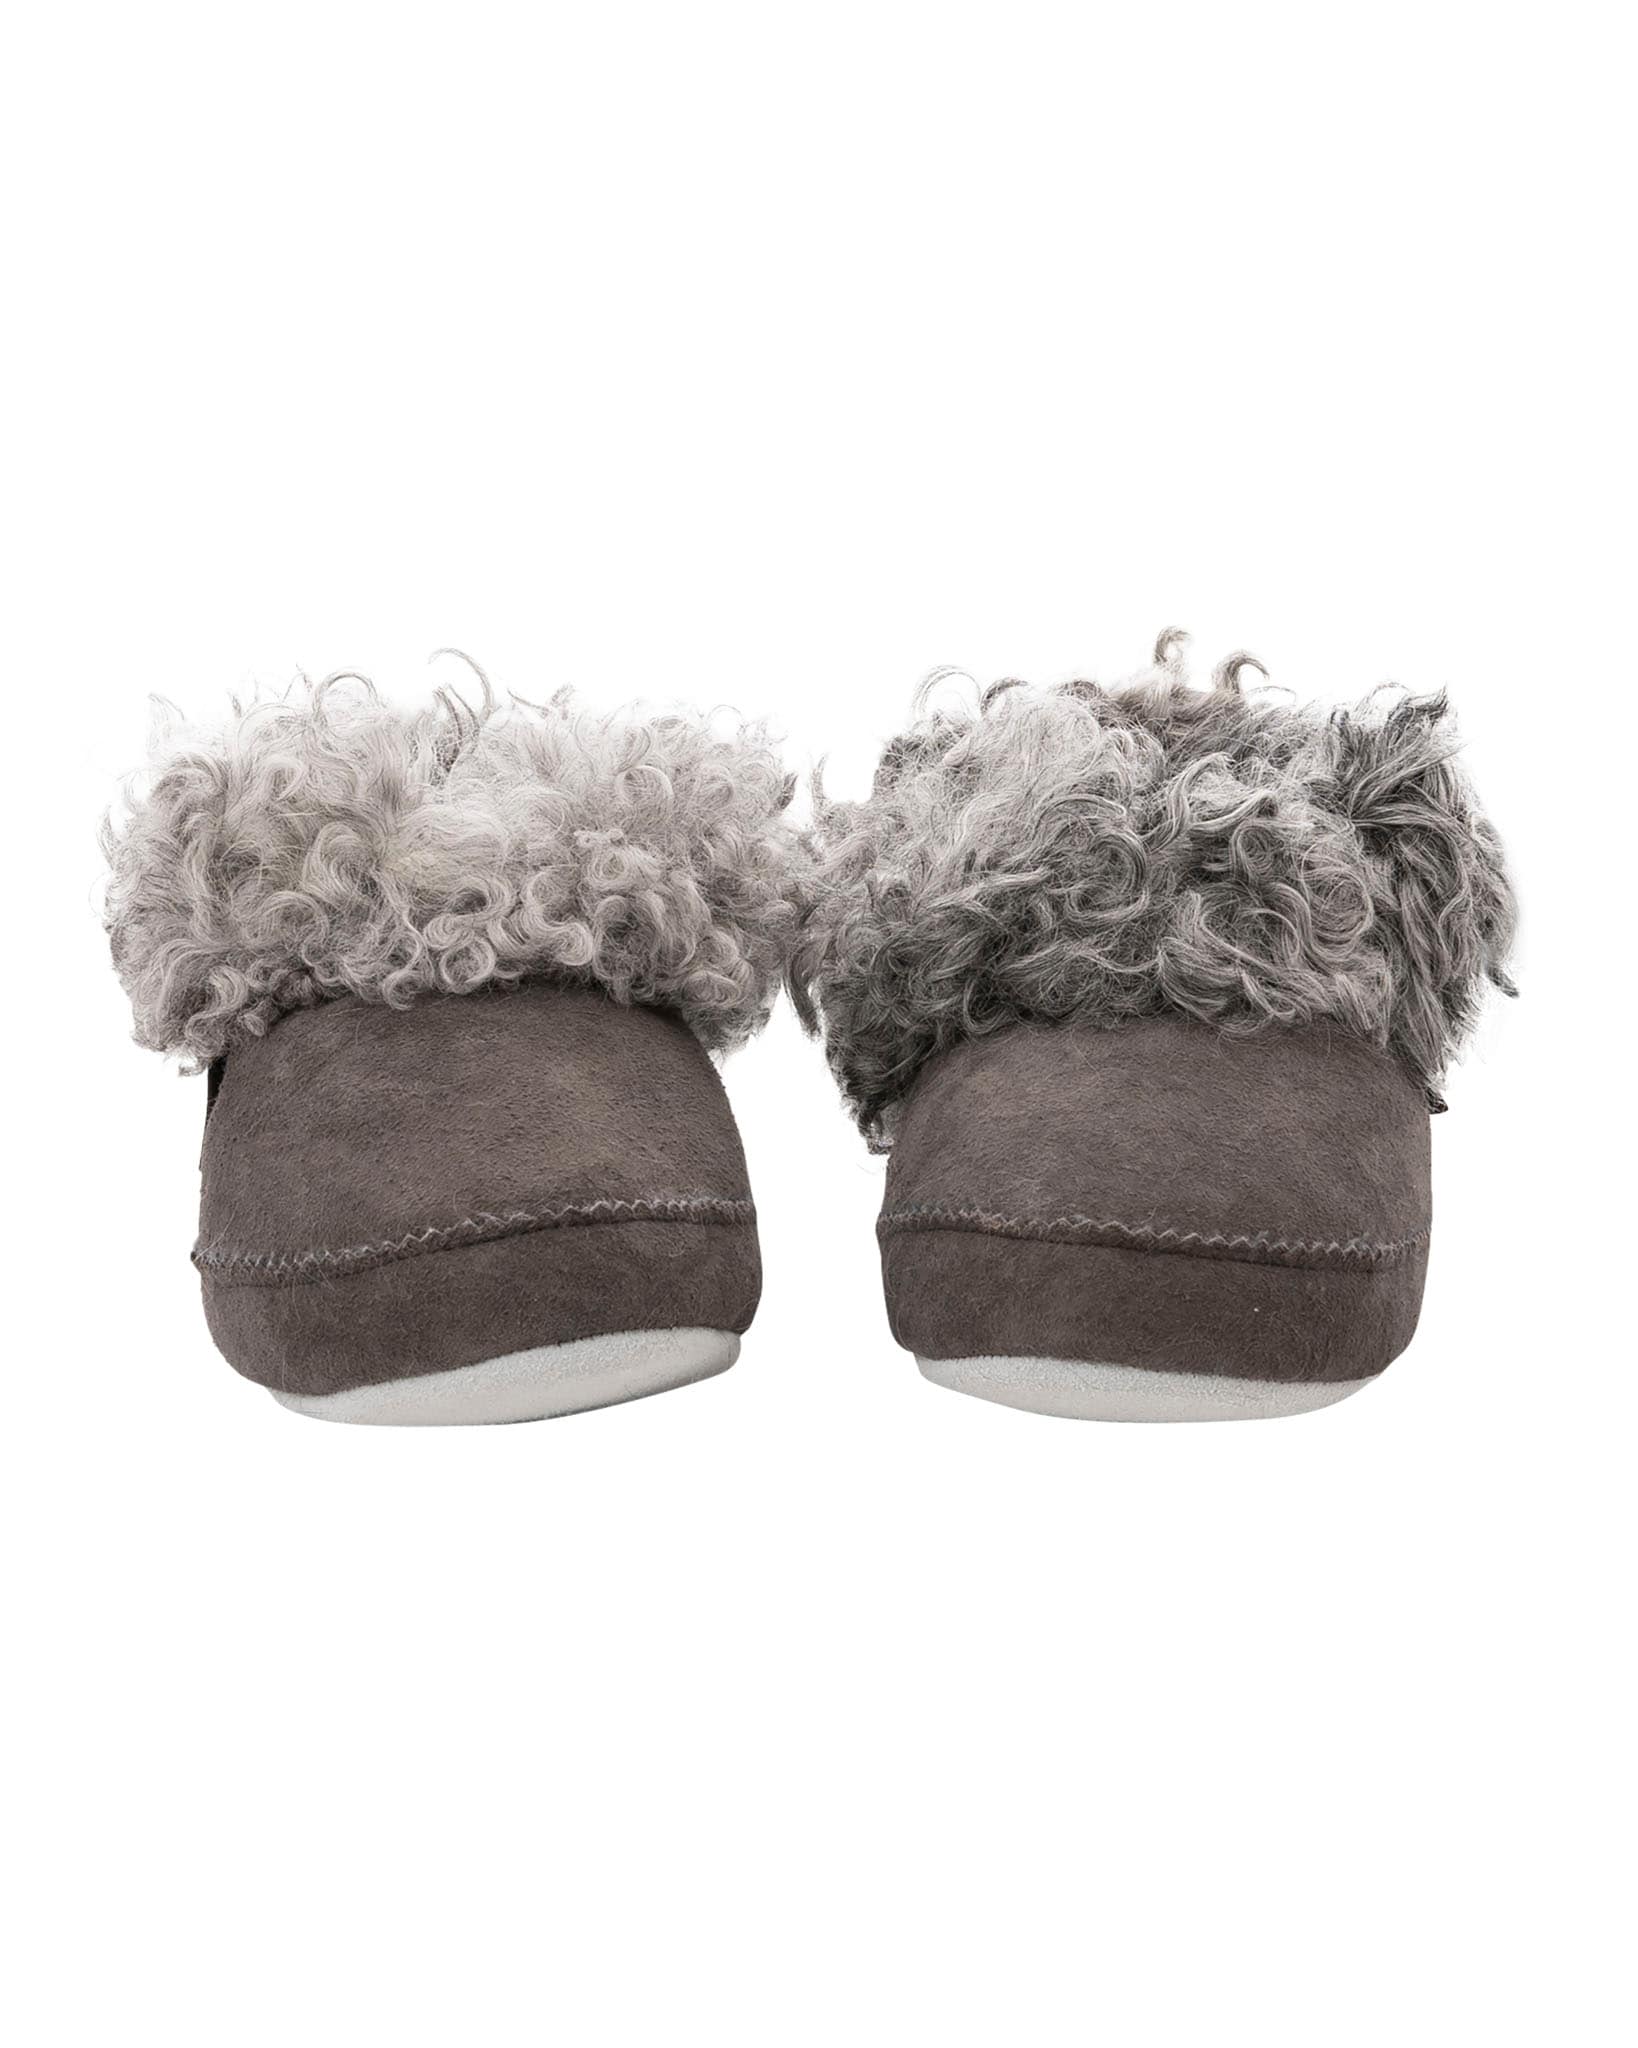 Svea sheepskin slippers